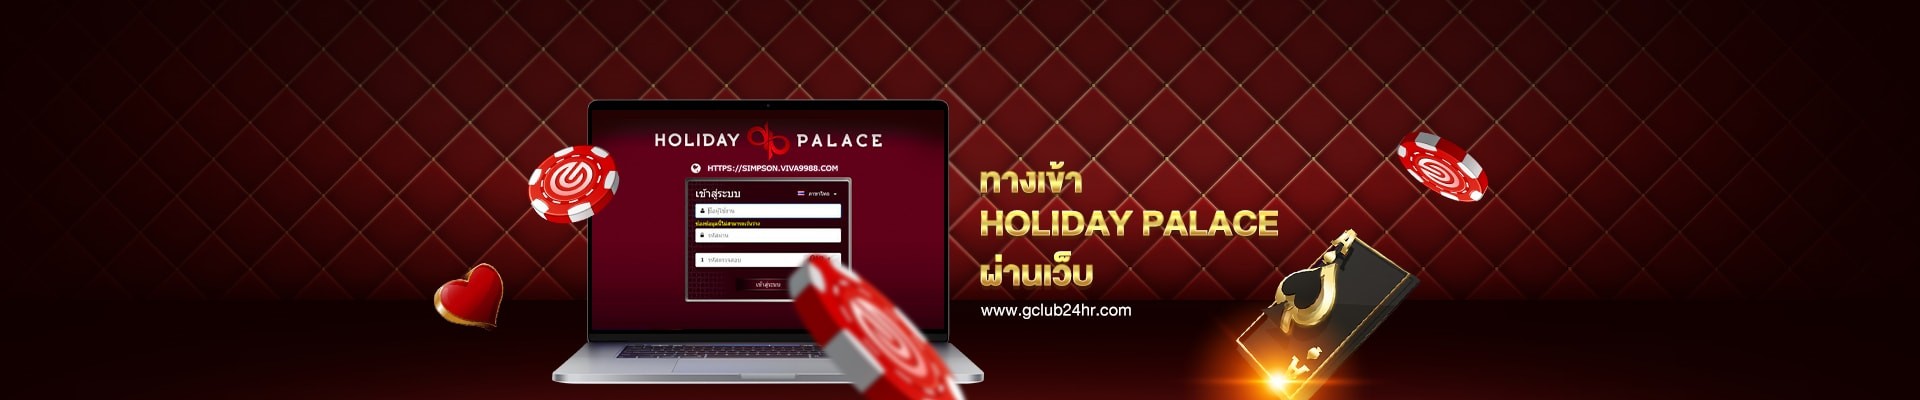 gclub24hr_casino_online_holiday_palace_login